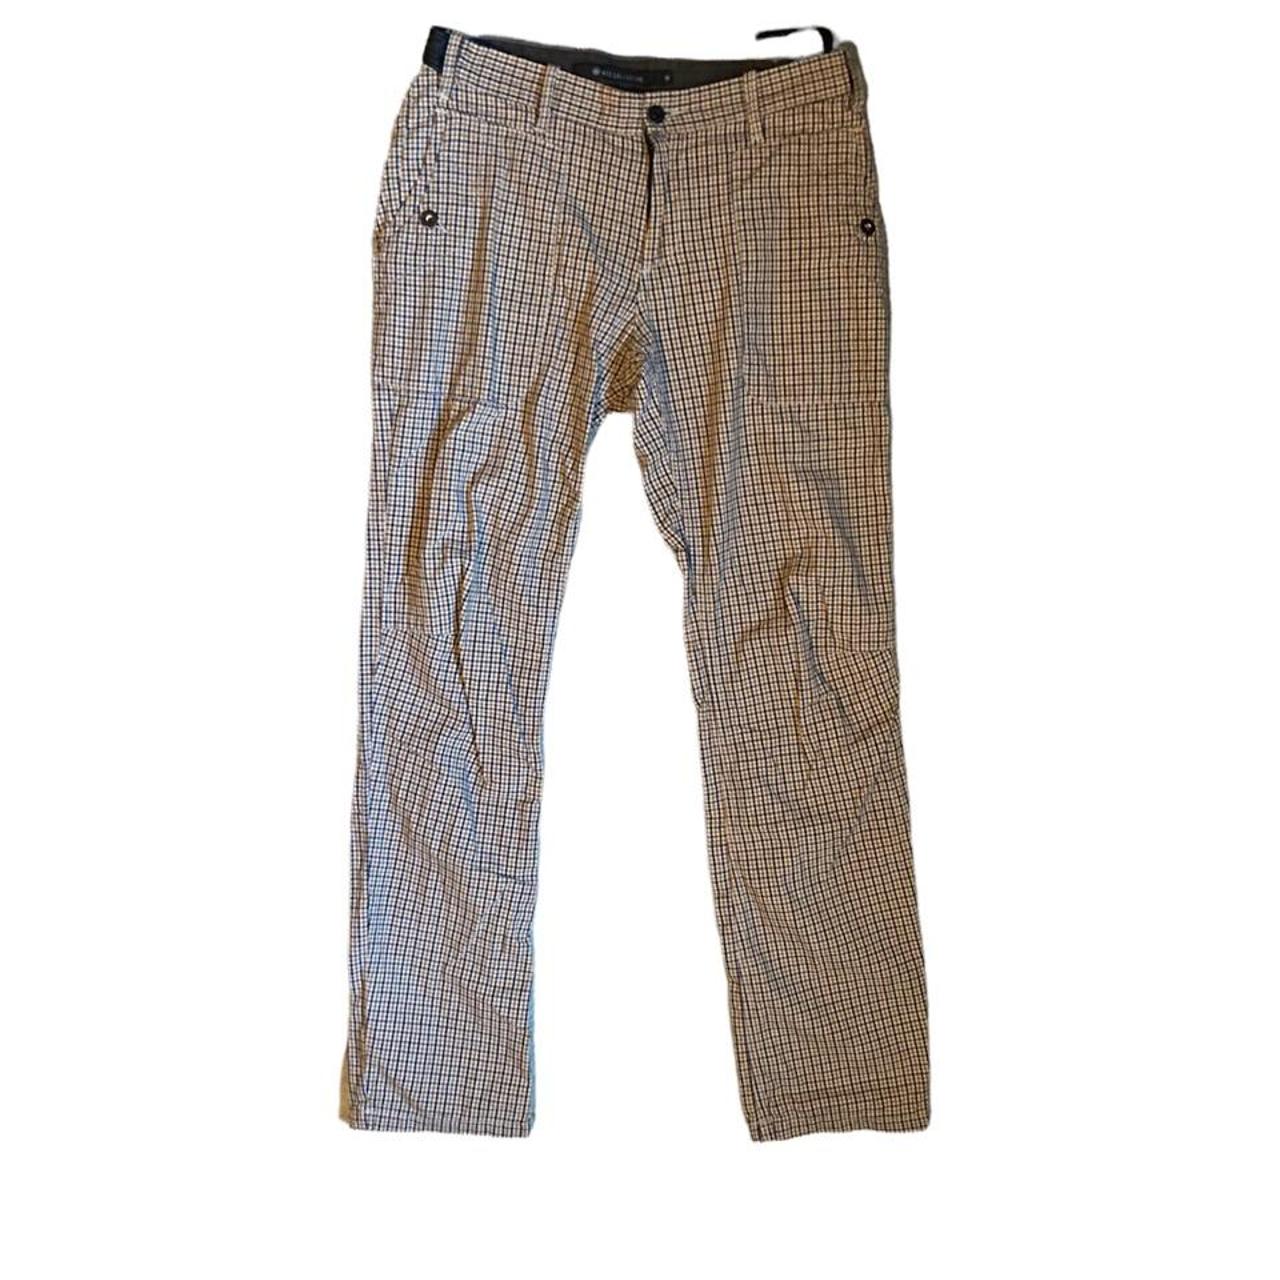 Product Image 1 - Mens Plaid Pants
9/10 condtion